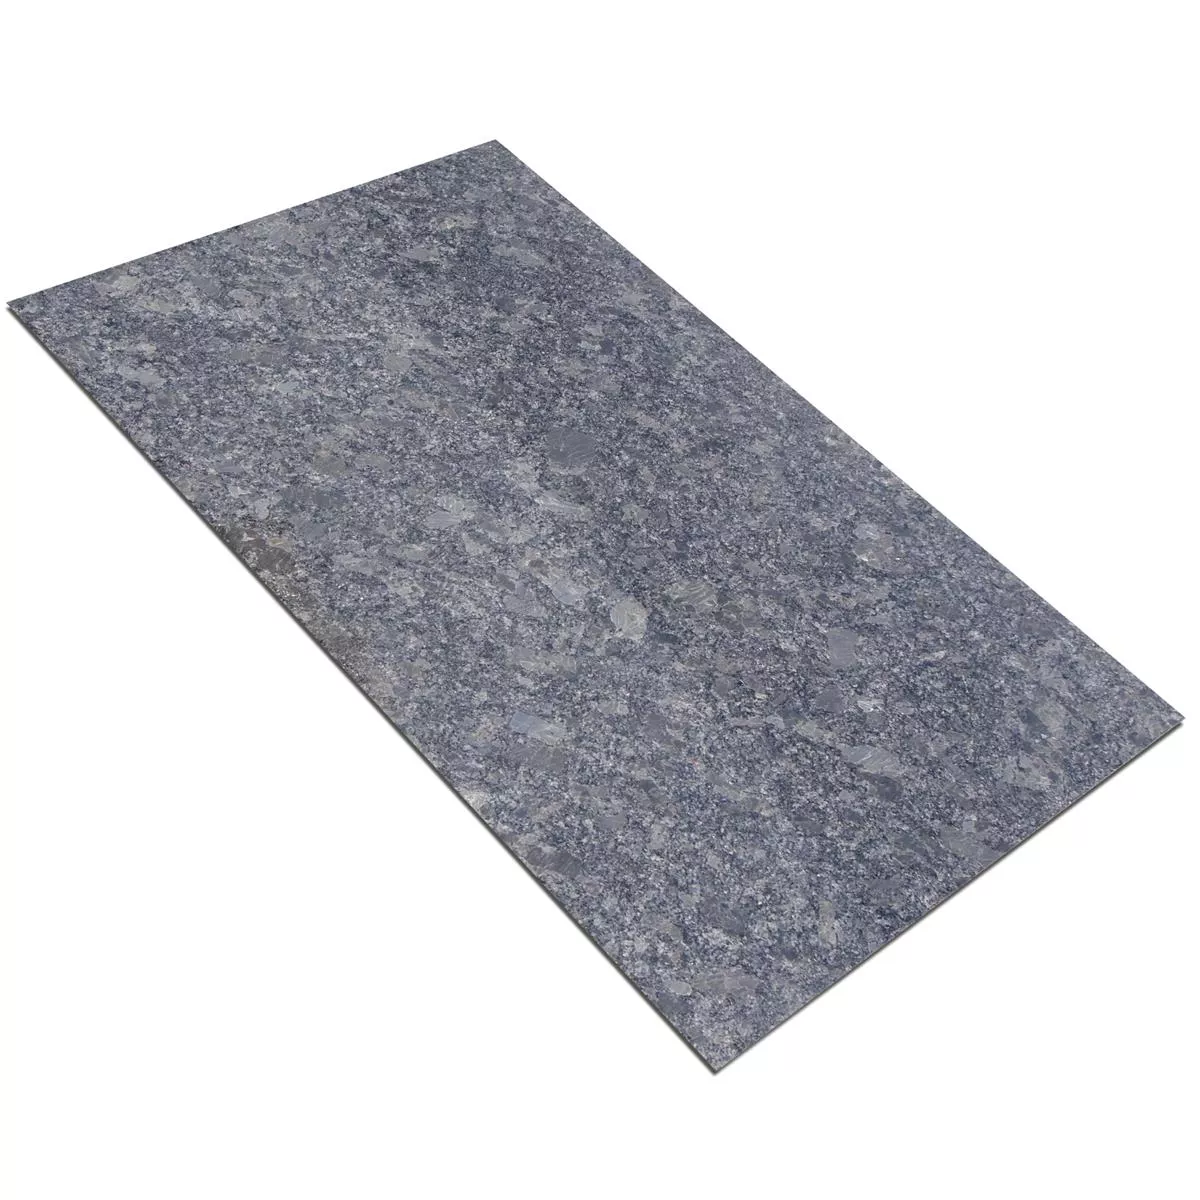 Sample Natural Stone Tiles Granite Old Grey Polished 30,5x61cm